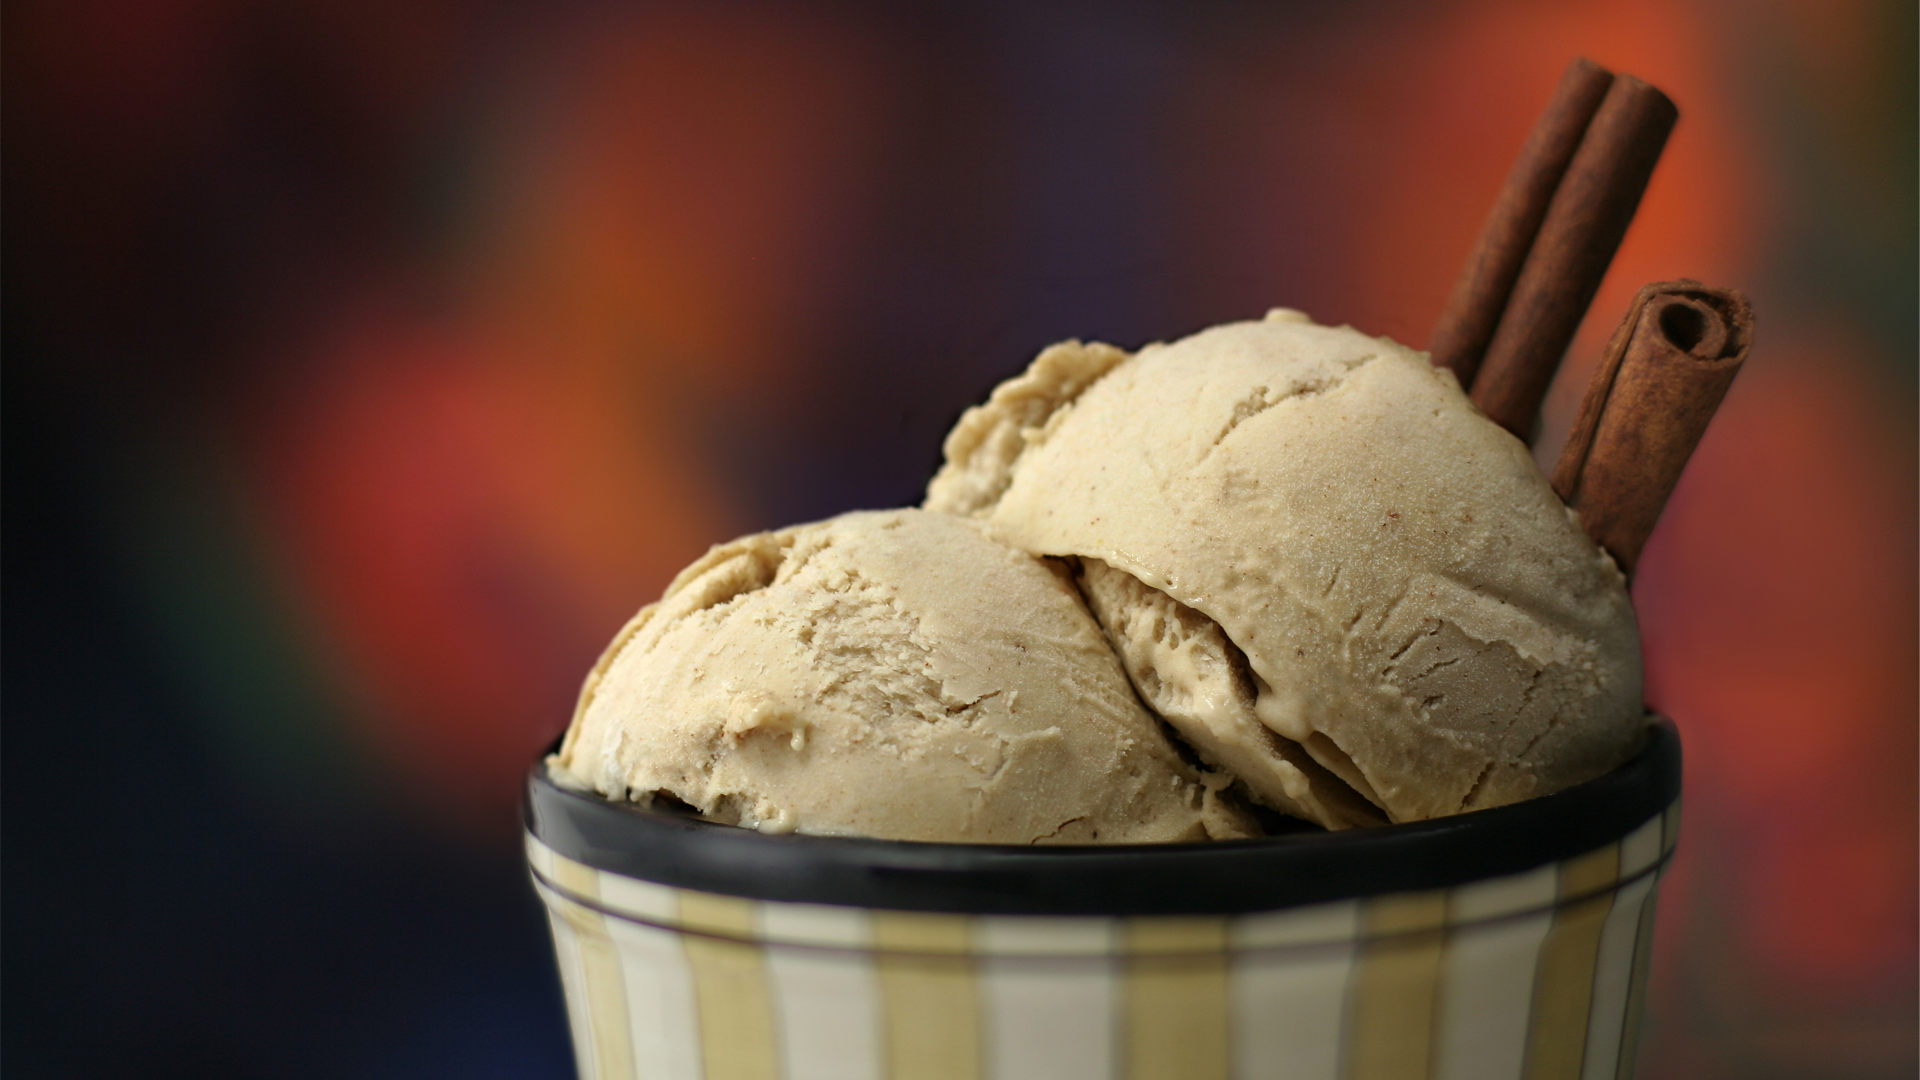 Dark Background And Ice Cream With Cinnamon - Ice Cream Hd Images Dark - HD Wallpaper 